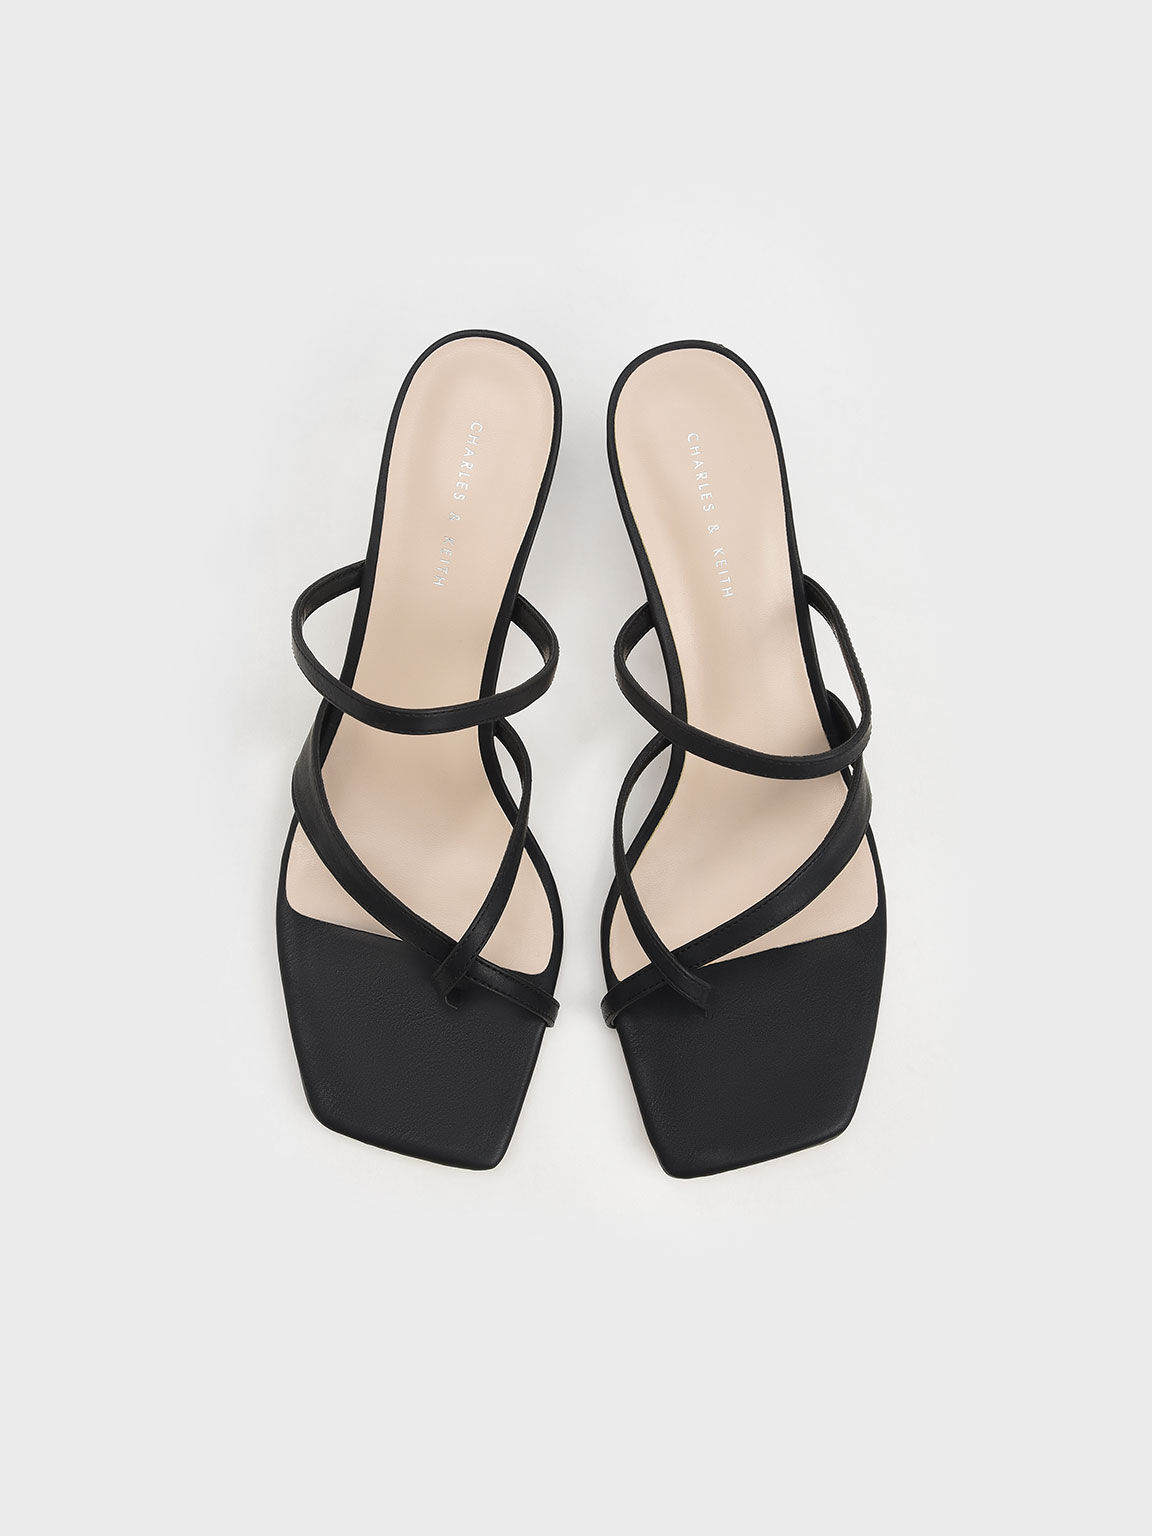 Toe Loop Heeled Sandals, Black, hi-res